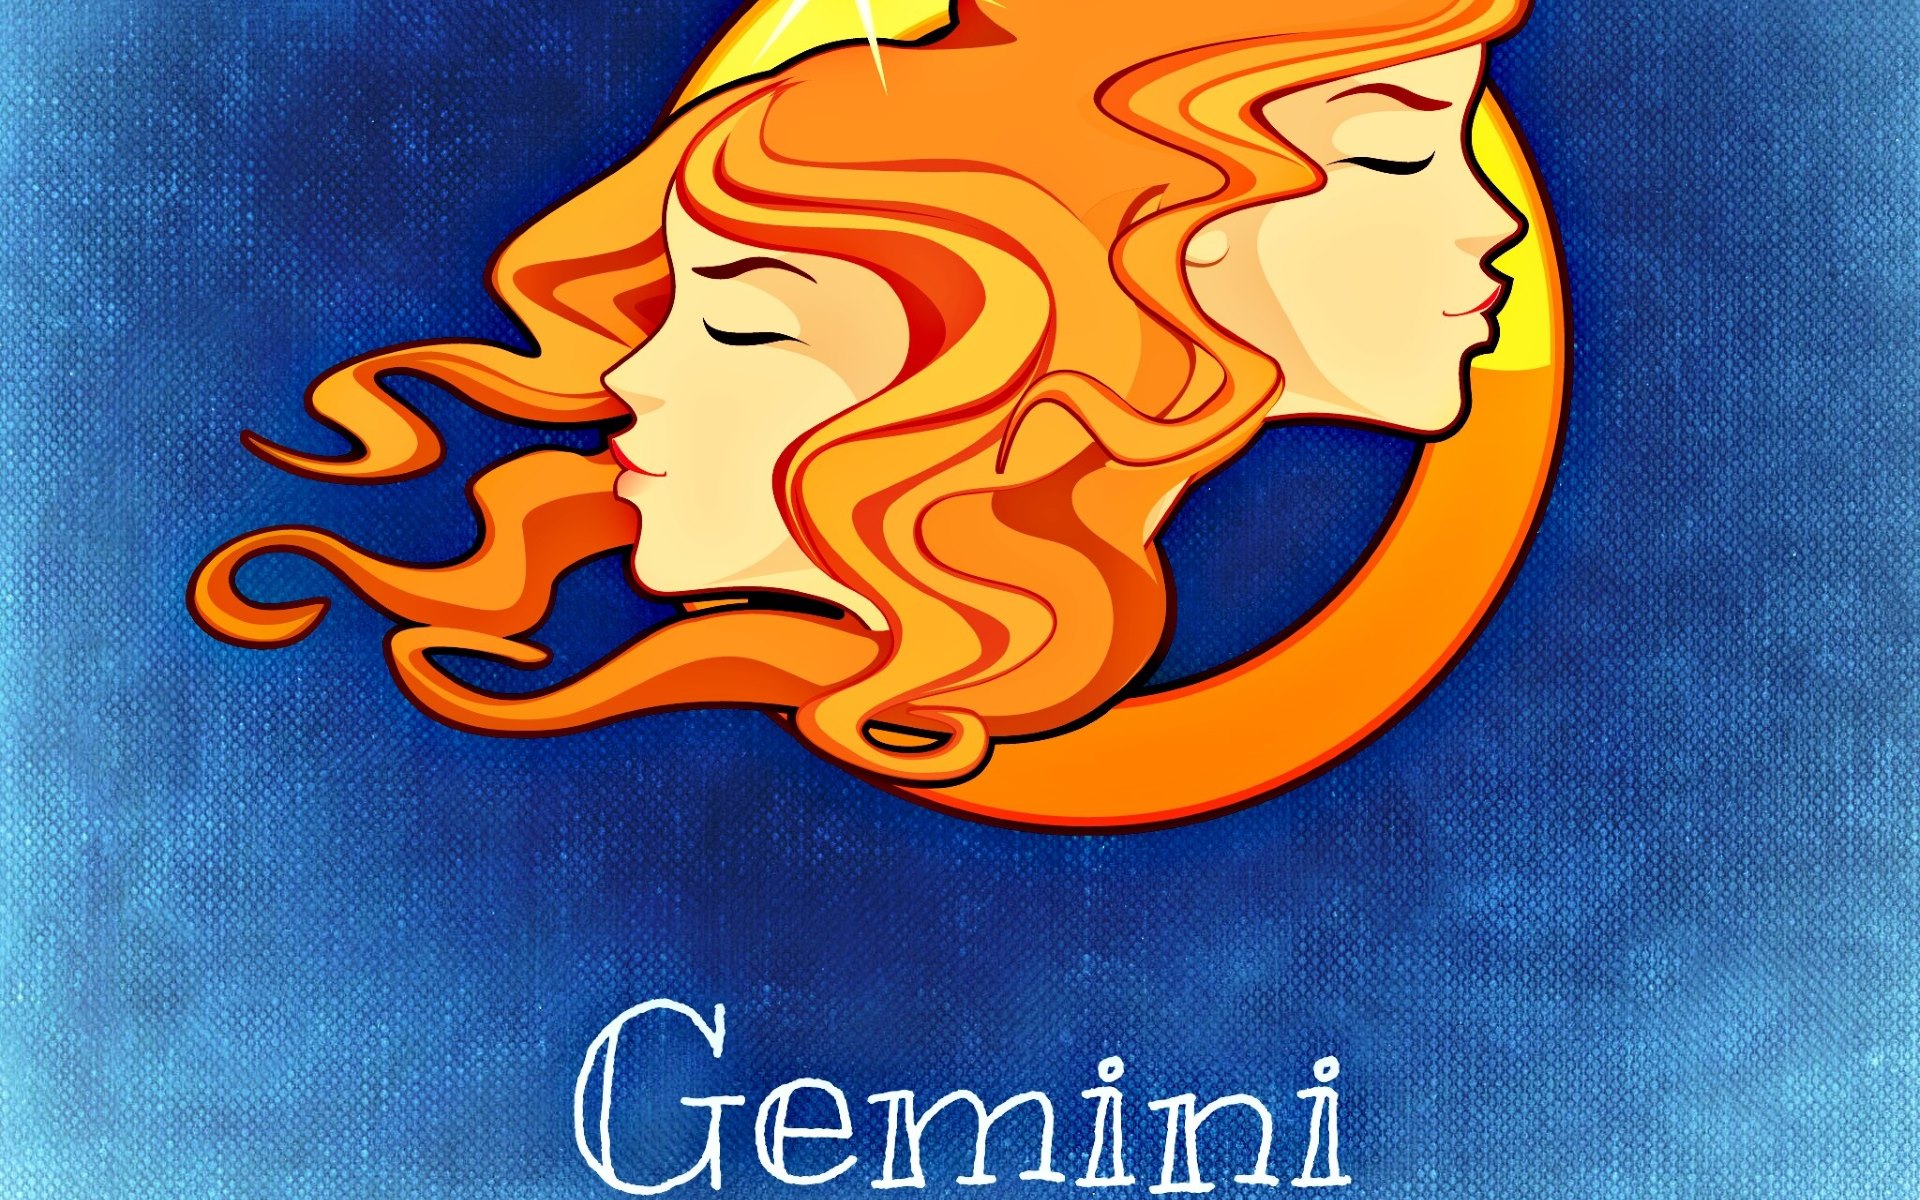 Horoscope - Gemini by Alexas_Fotos